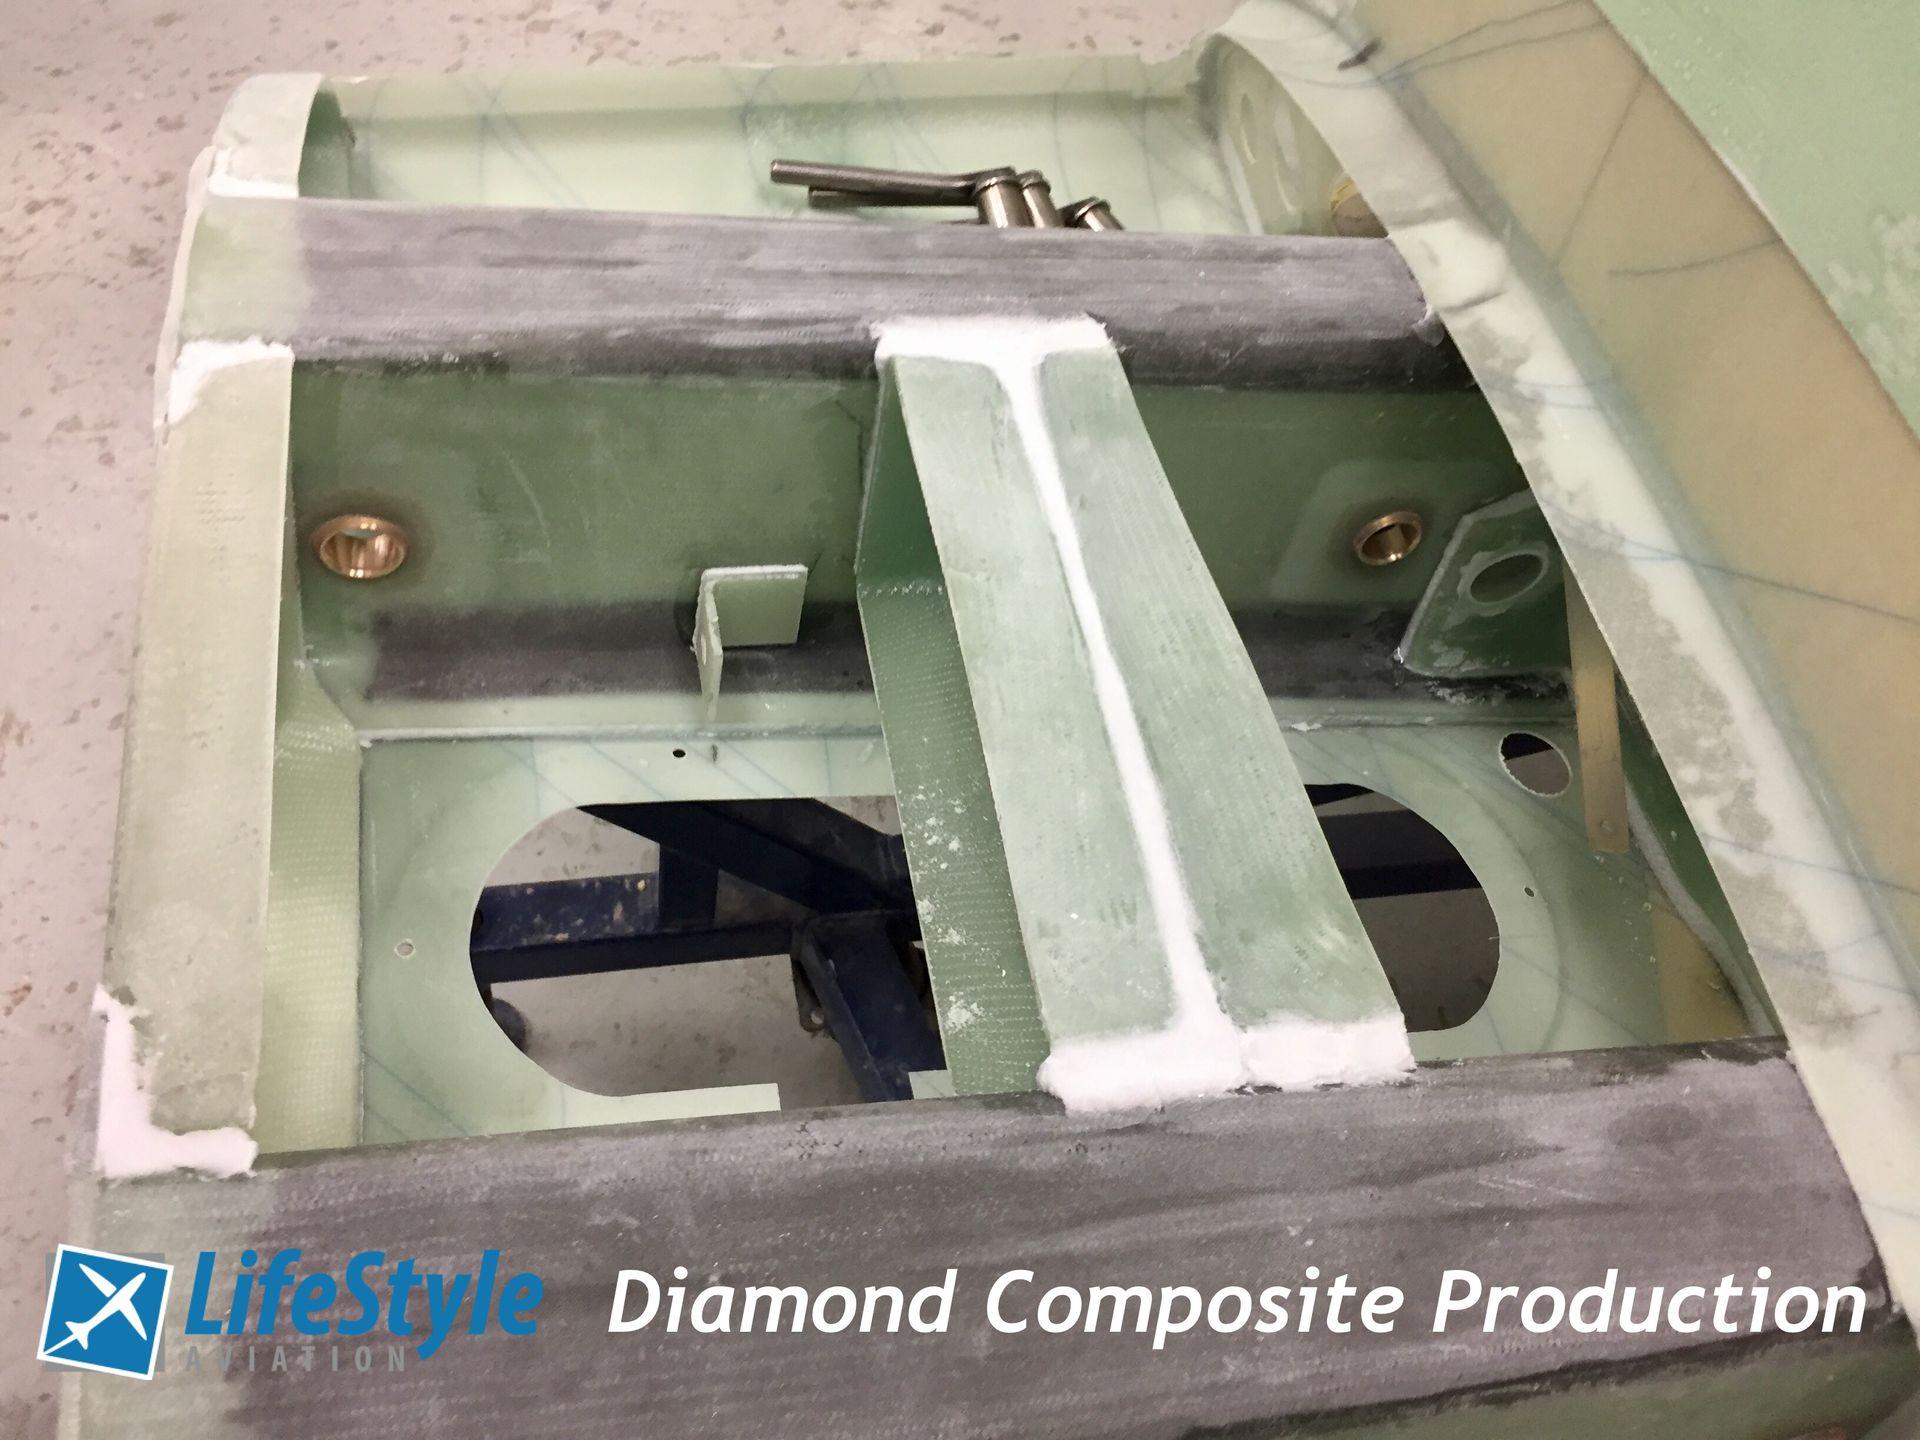 Diamond Composite Production